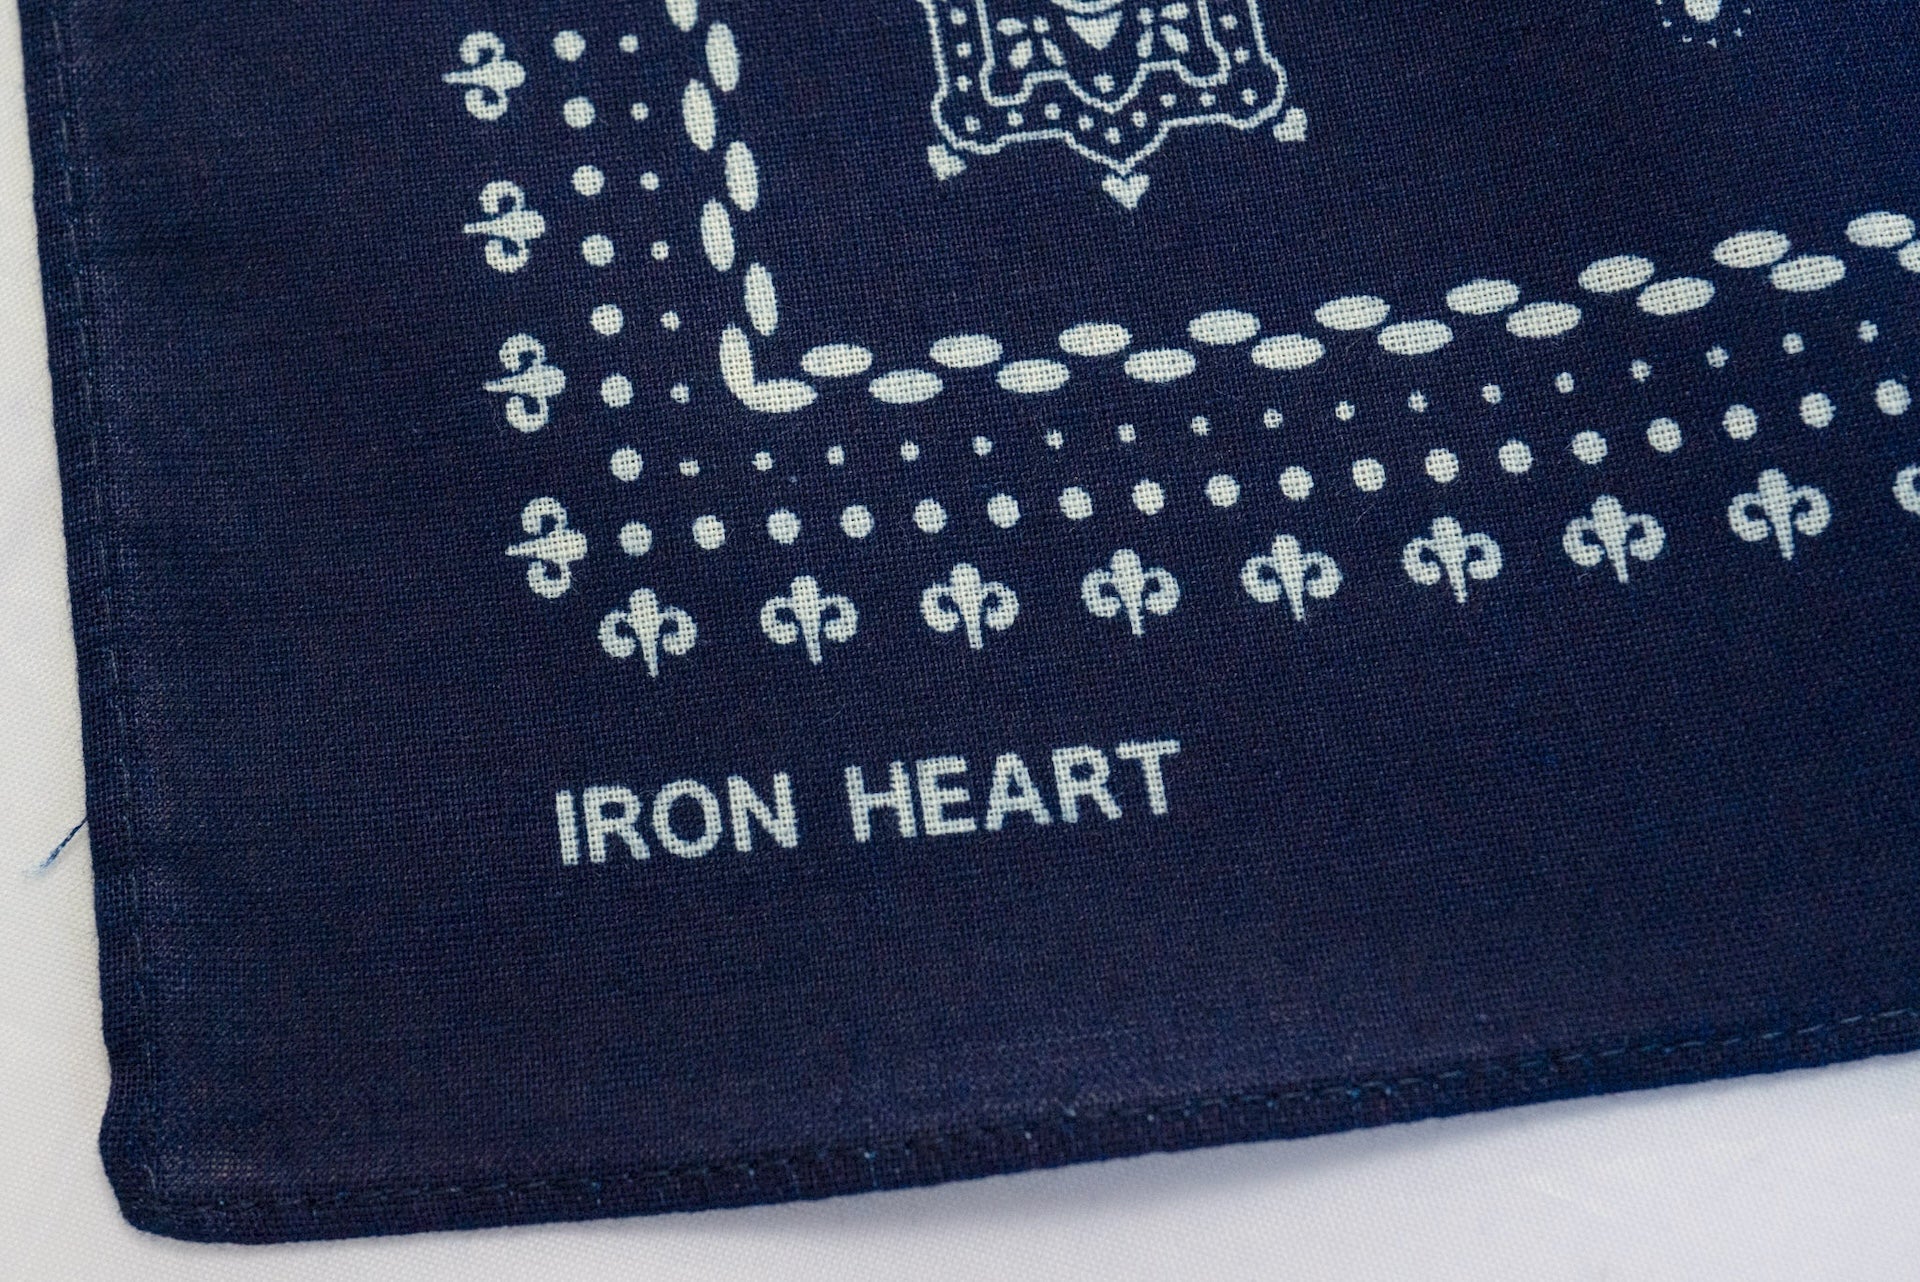 Iron Heart "Bell" Print Bandana (Indigo)